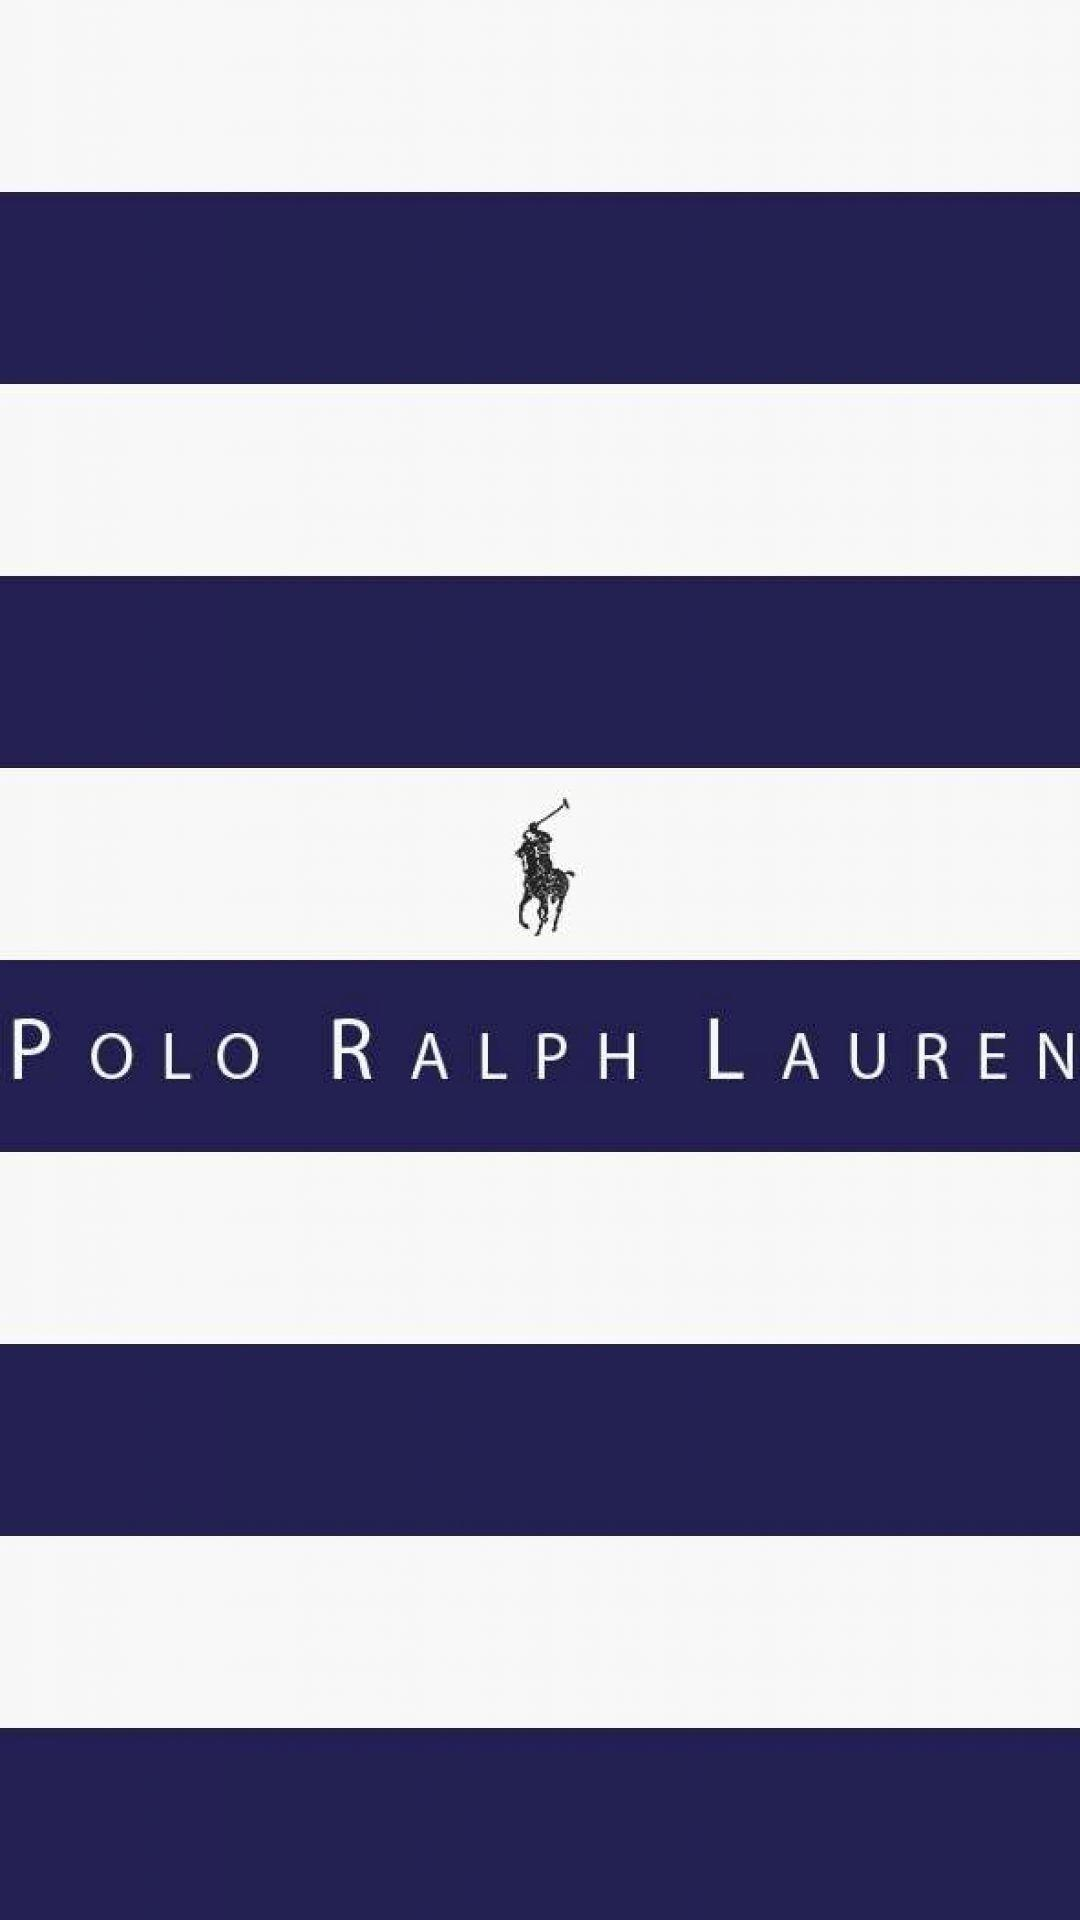 1080x1920 Polo Ralph Lauren Logo Wallpapers